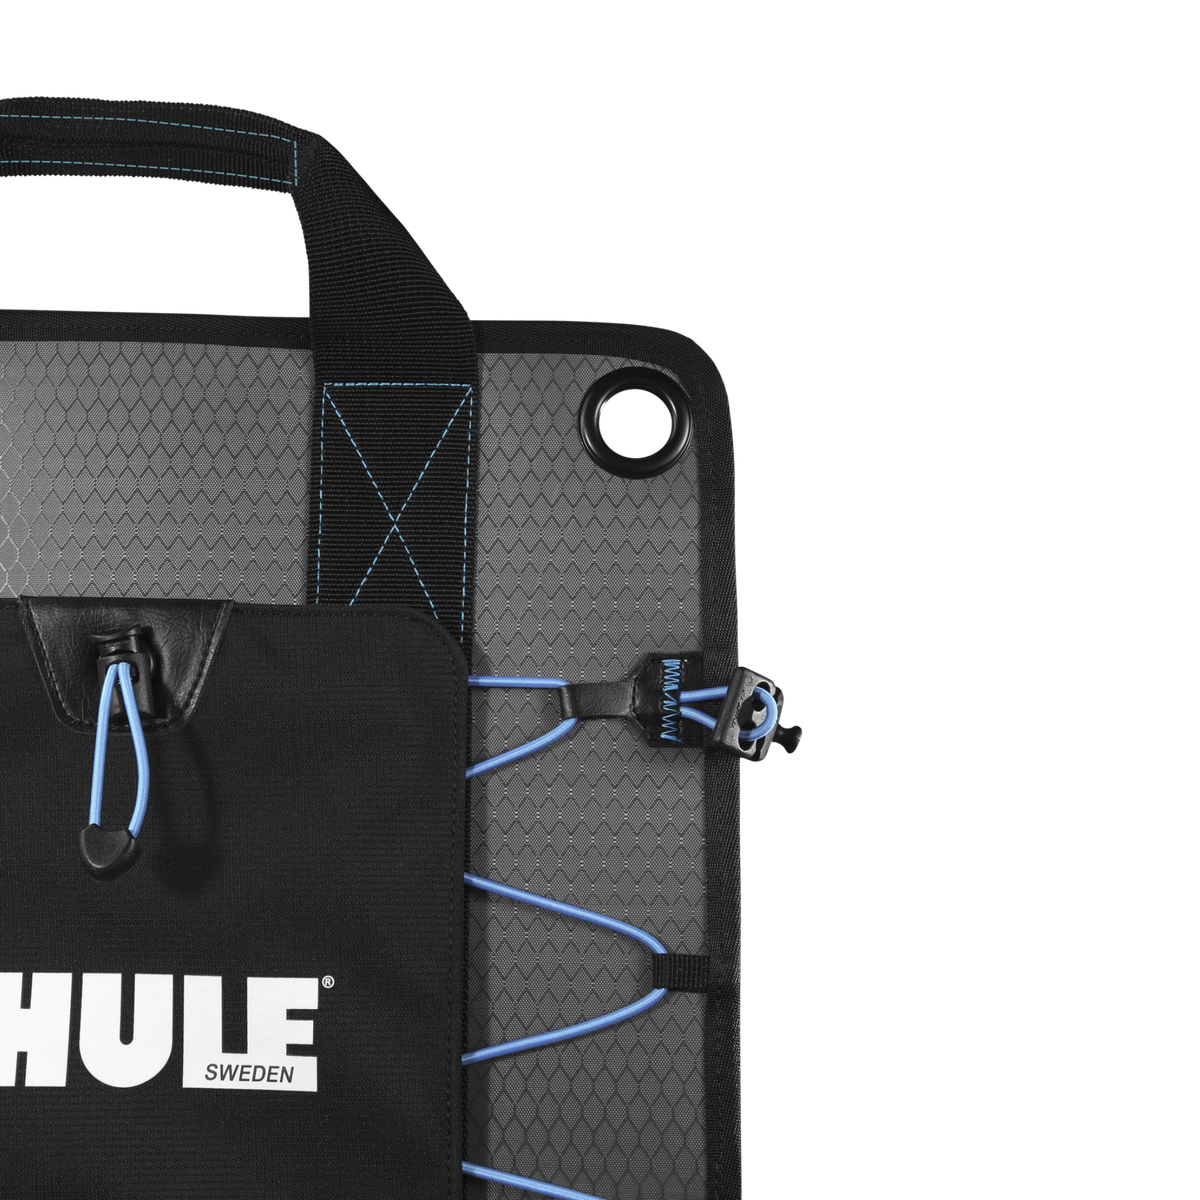 Thule Go Box storage solution